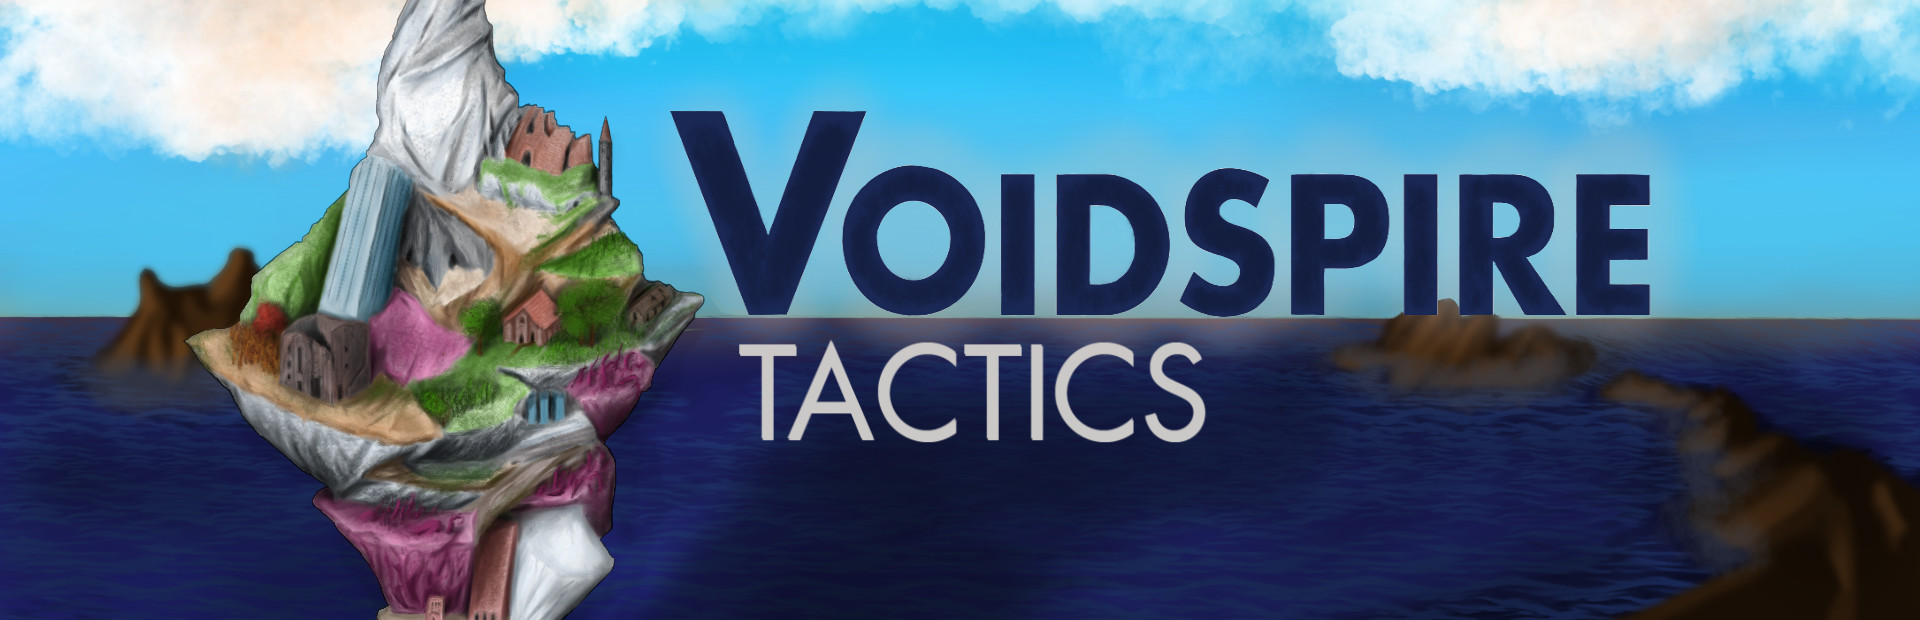 Voidspire Tactics cover image